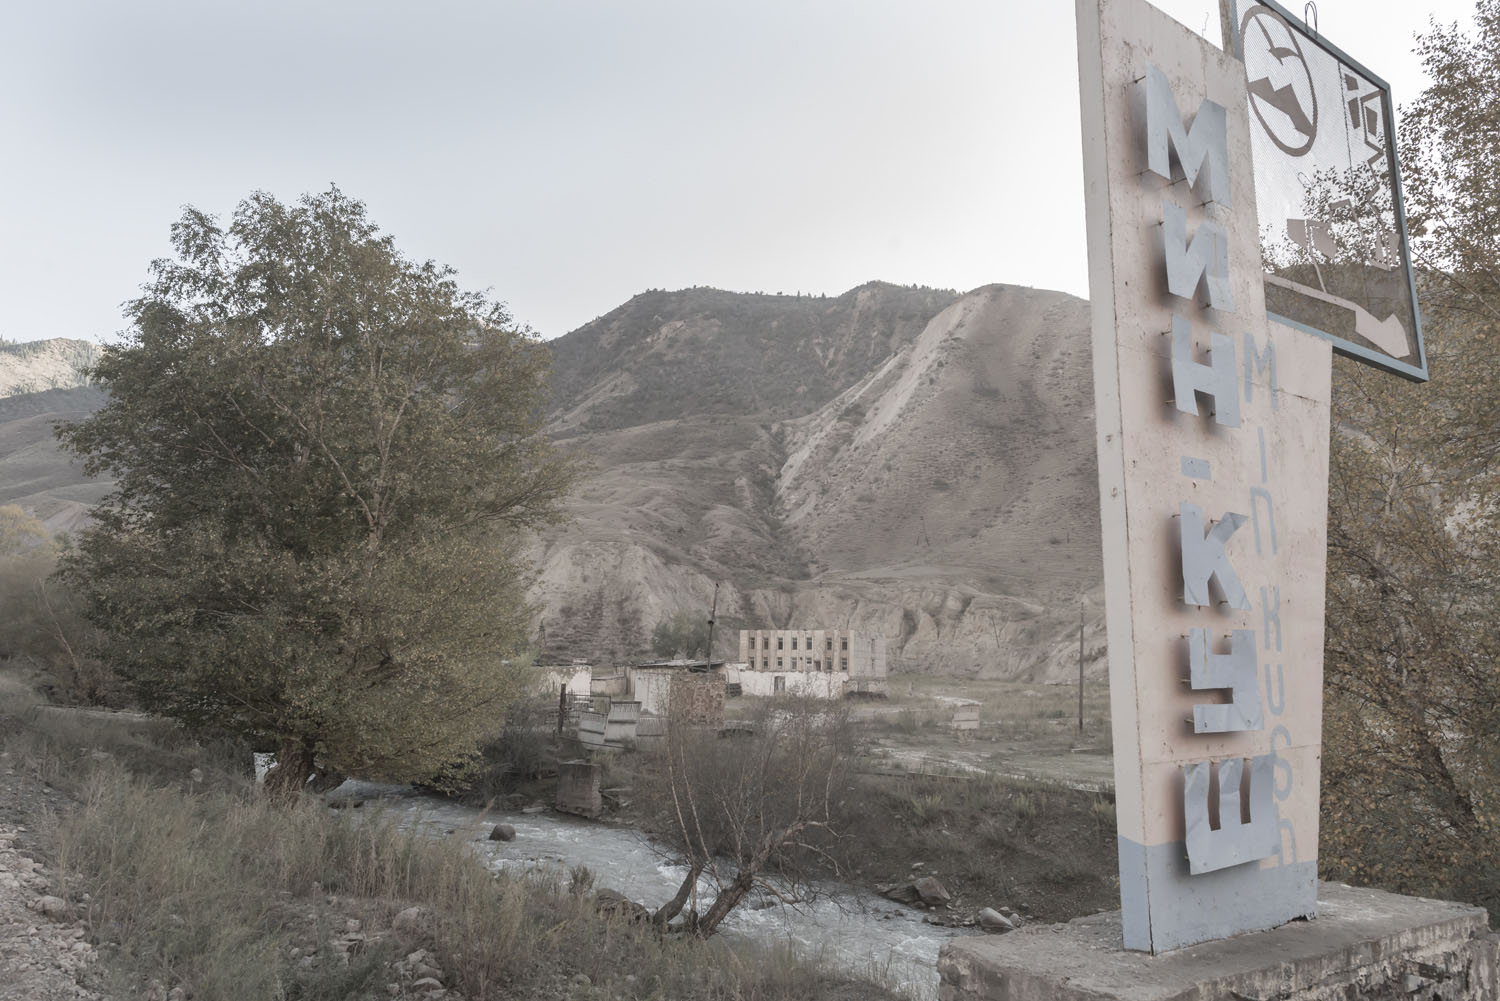 min-kush-soviet-uranium-mining-town-industrial-Russia-Kyrgyzstan-ruins-soviet-sign-jo-kearney-photos-video-photography.jpg